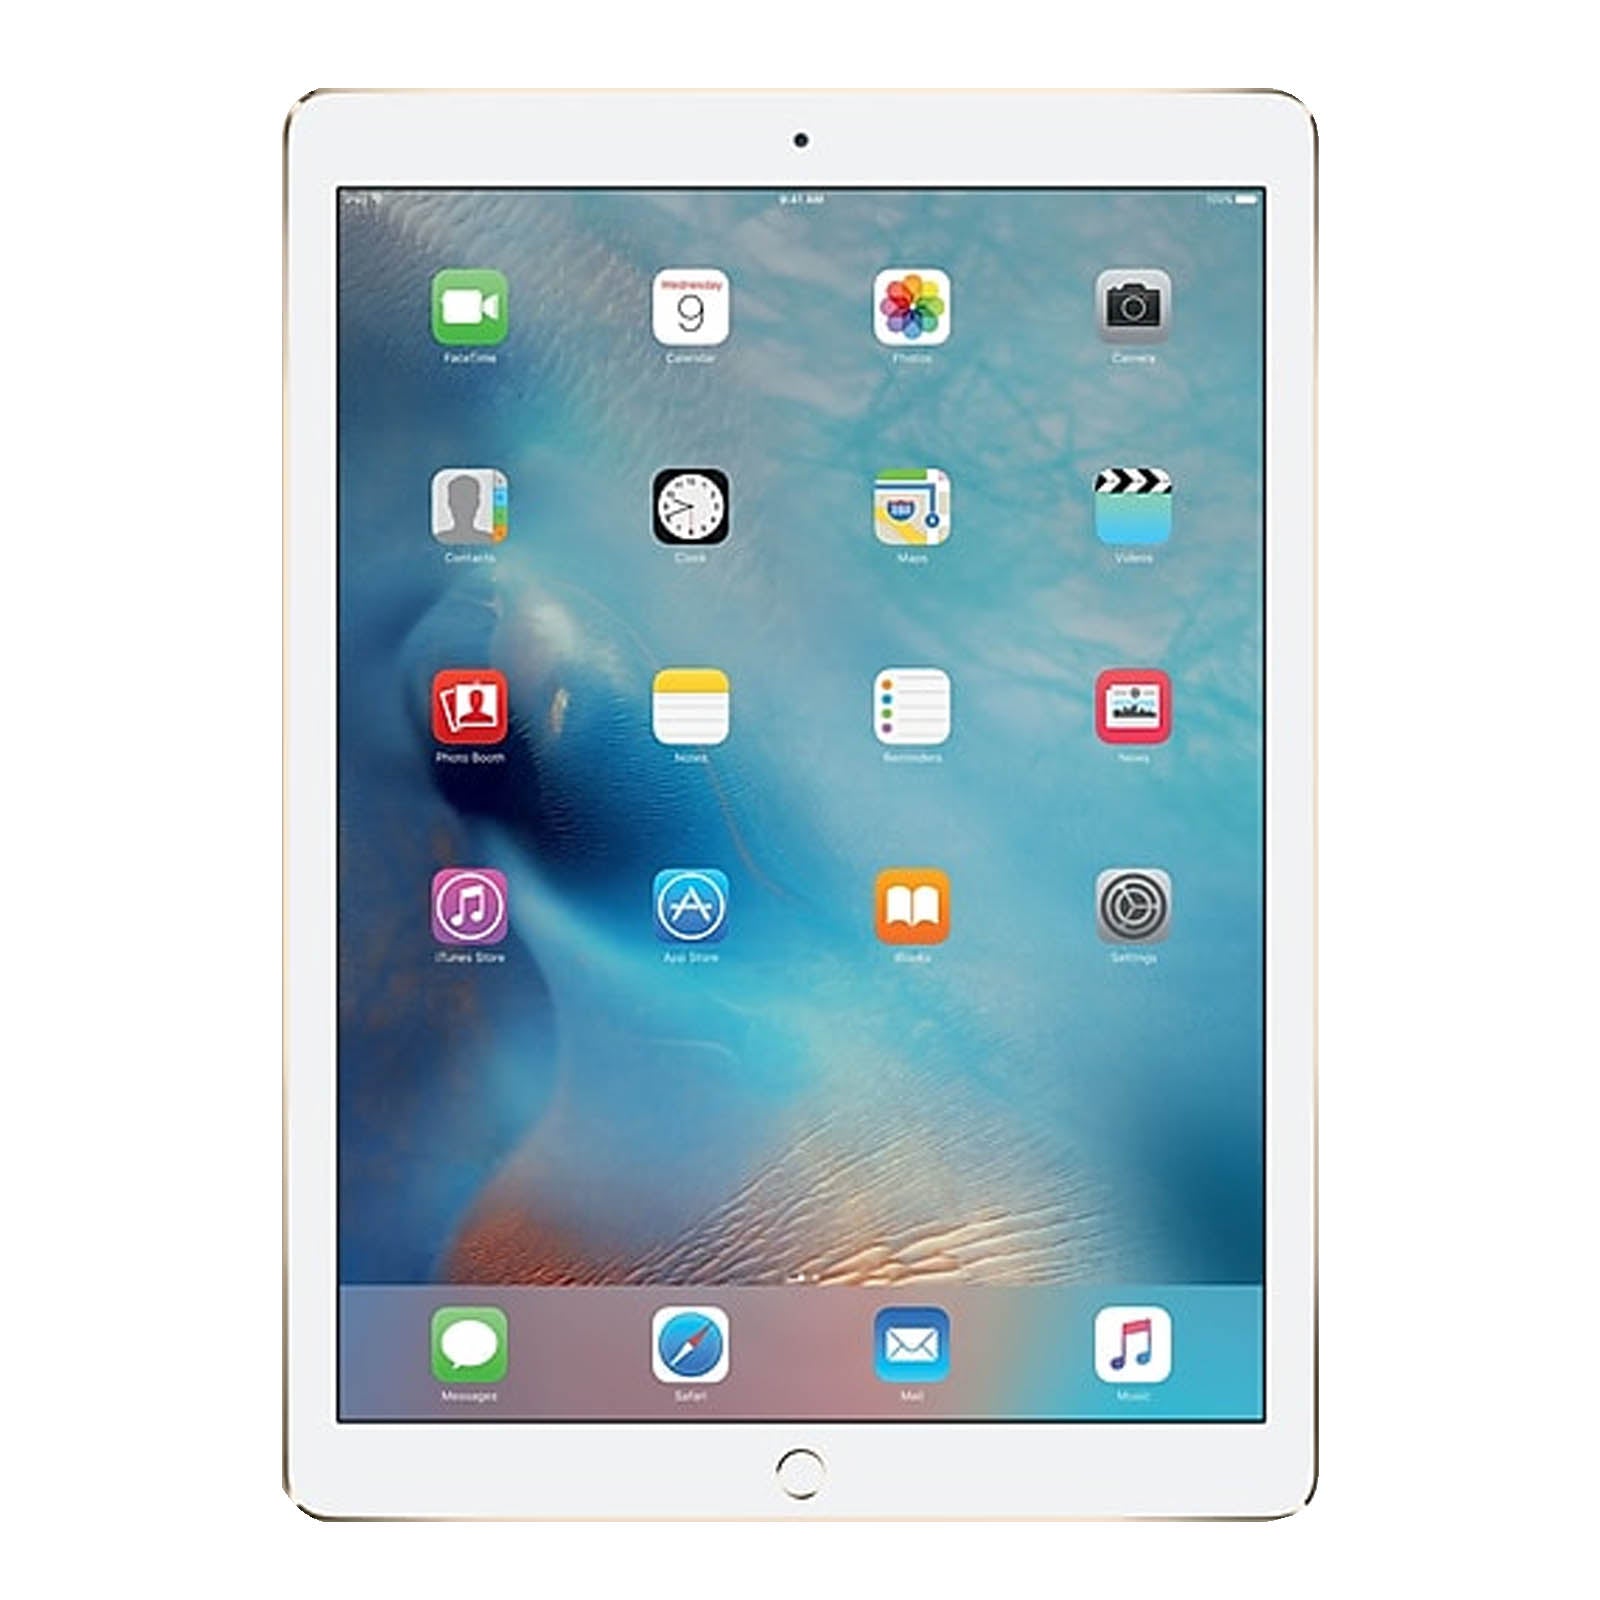 iPad Pro 12.9 Inch 2nd Gen 512GB Gold Pristine - WiFi